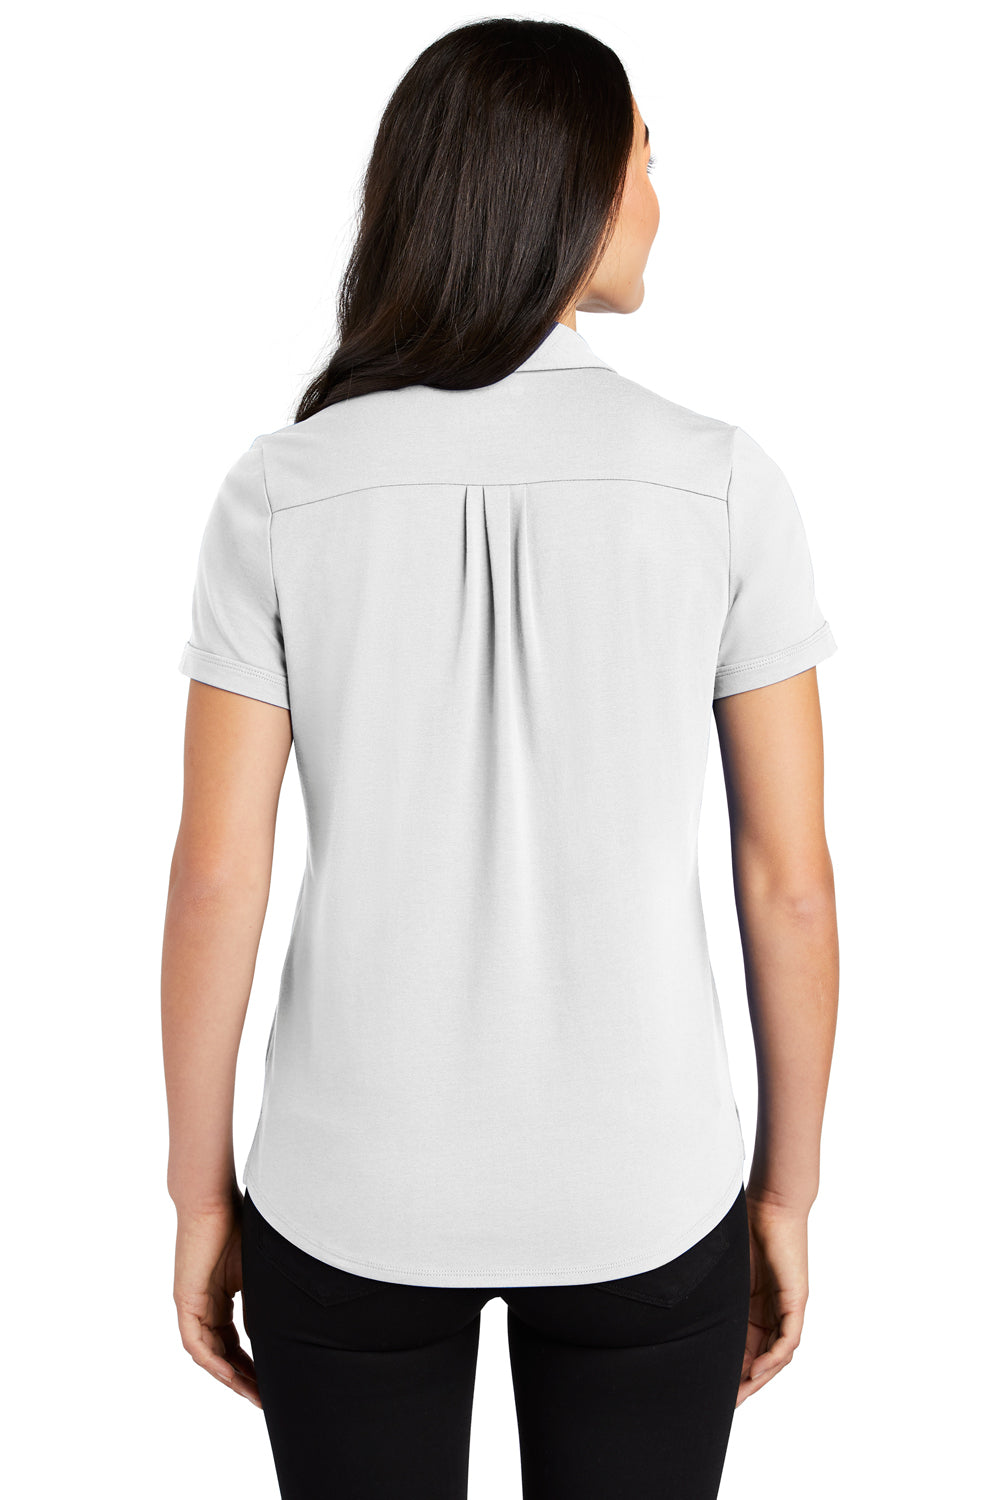 Ogio LOG138 Womens Limit Moisture Wicking Short Sleeve Polo Shirt White Back